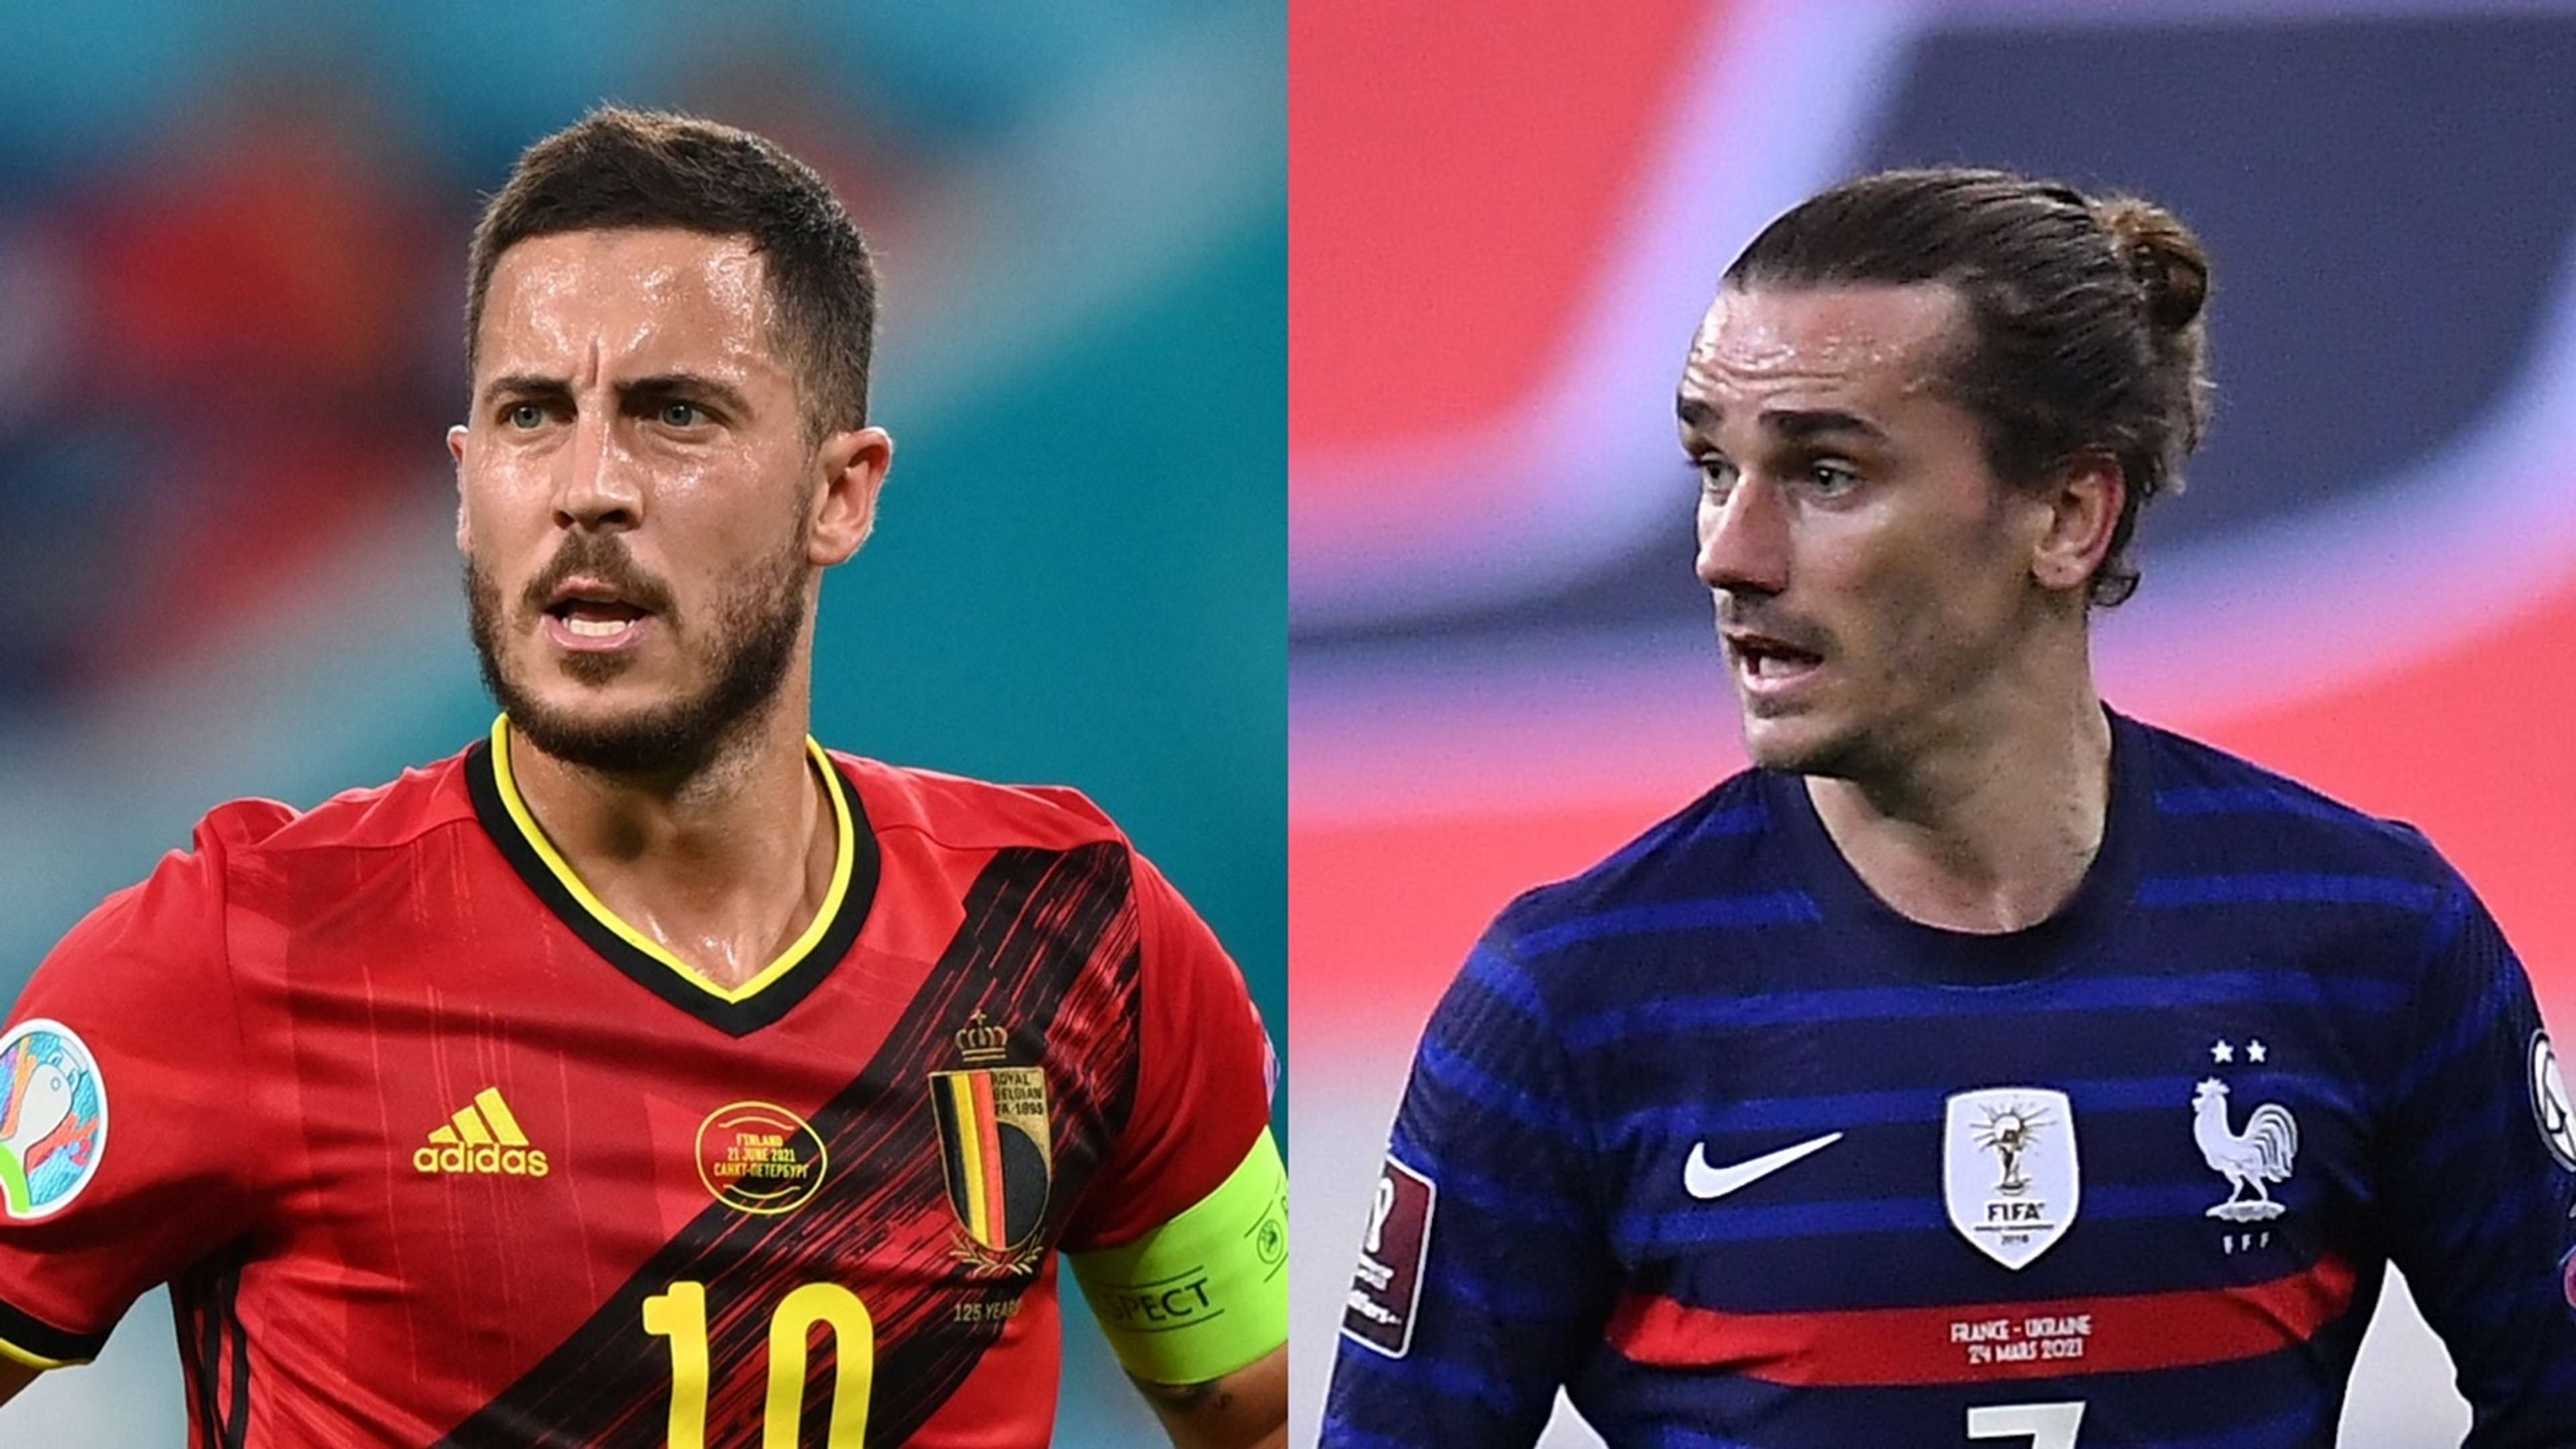 MP_Eden Hazard_Belgium vs Antoine Griezmann_France